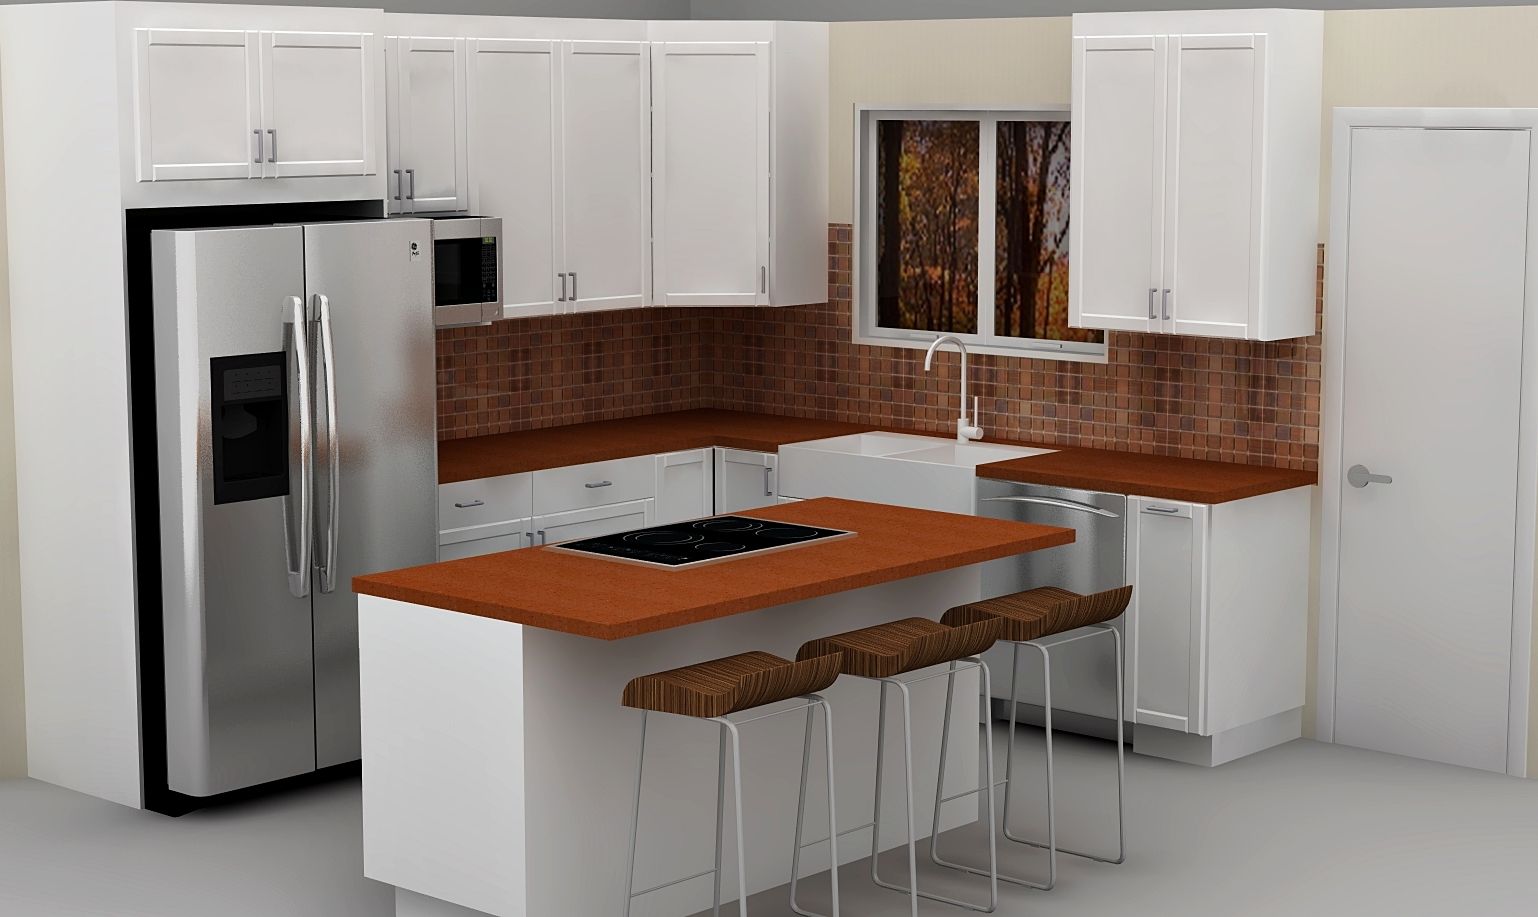 Brighter Kitchen Design Application from IKEA Online